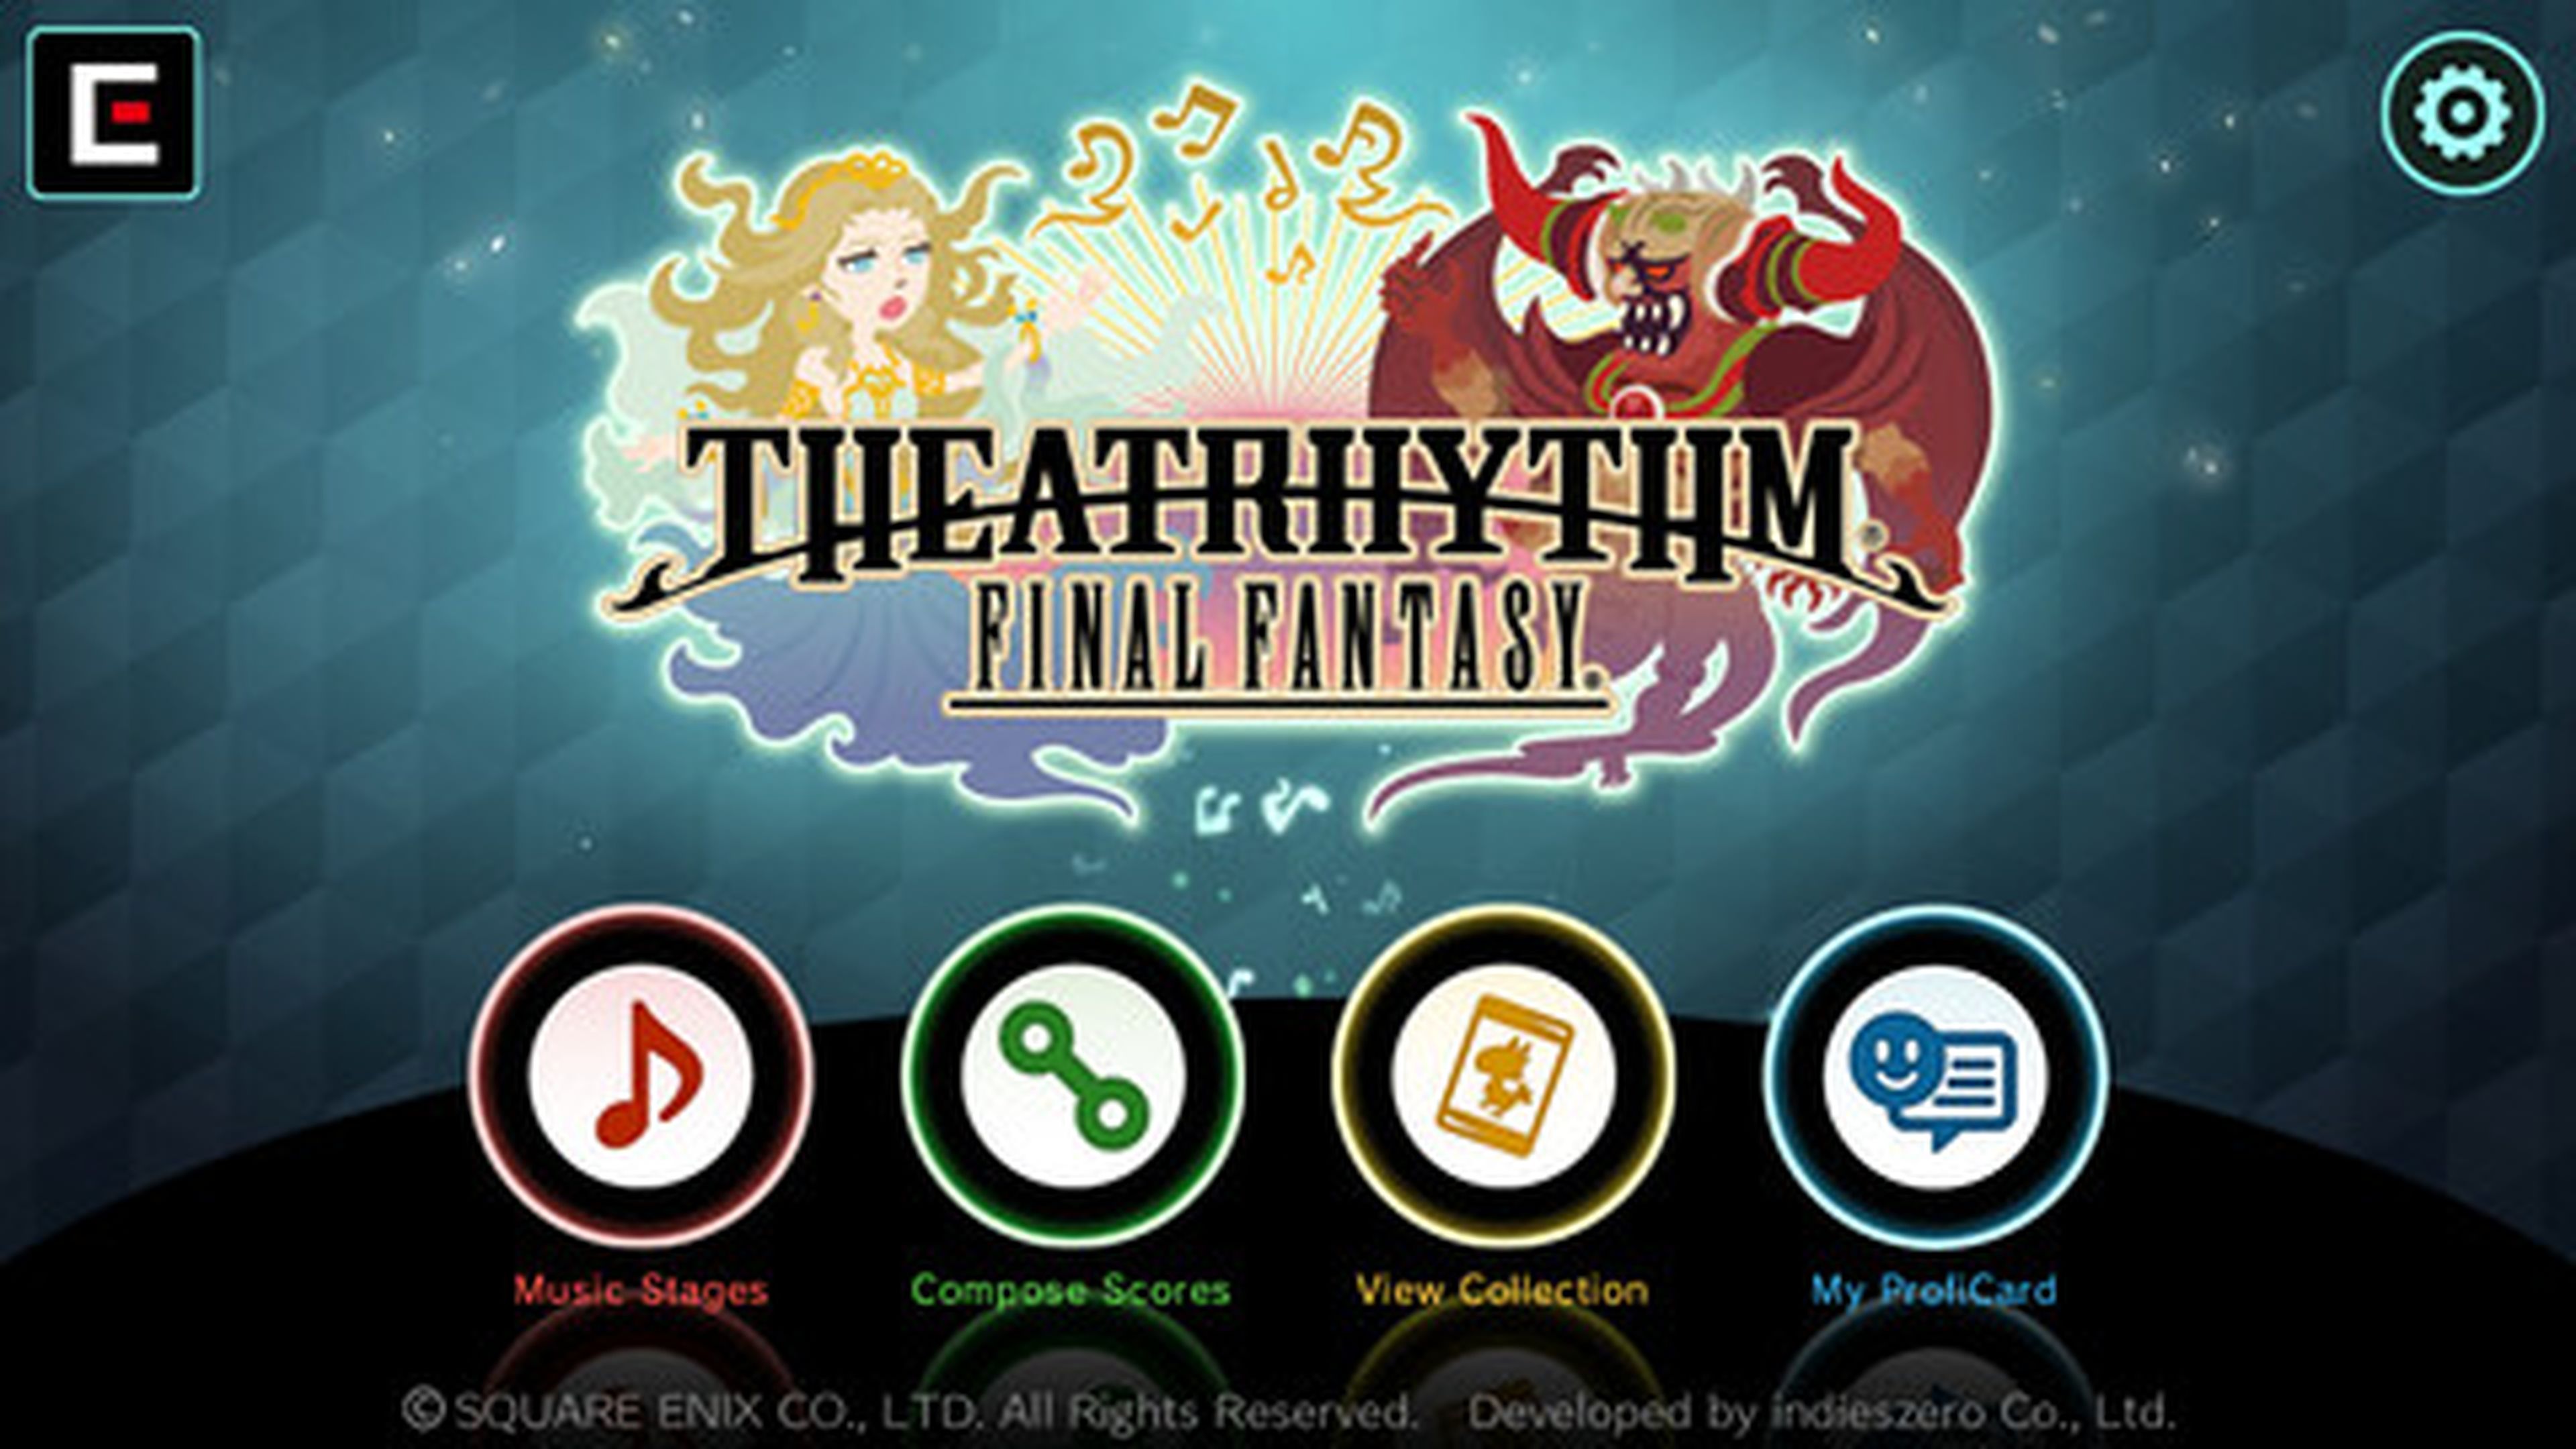 Theatrhythm Final Fantasy llega a dispositivos iOS